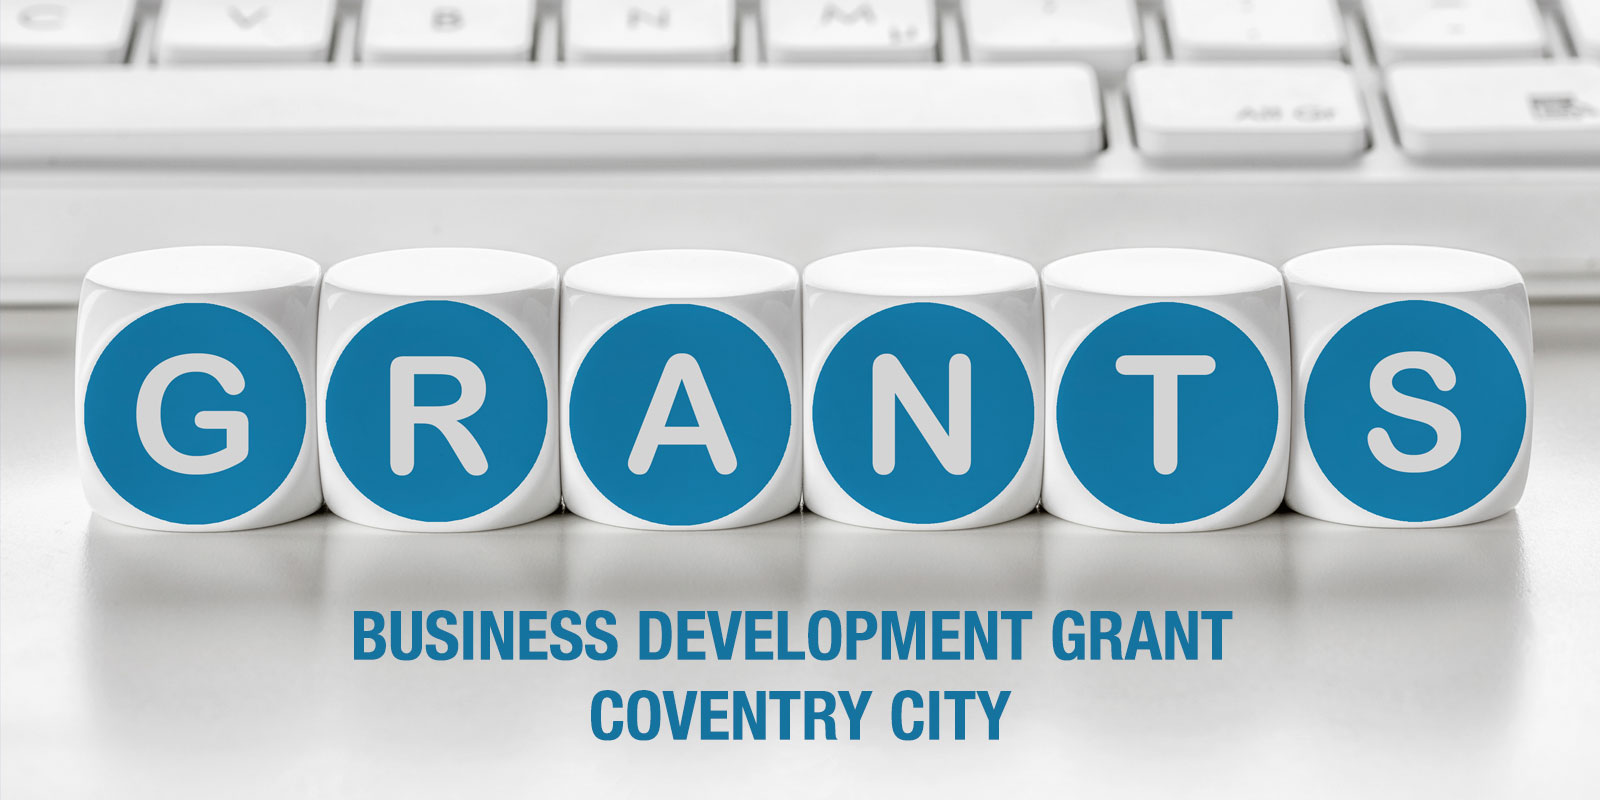 Business Development Grant - 